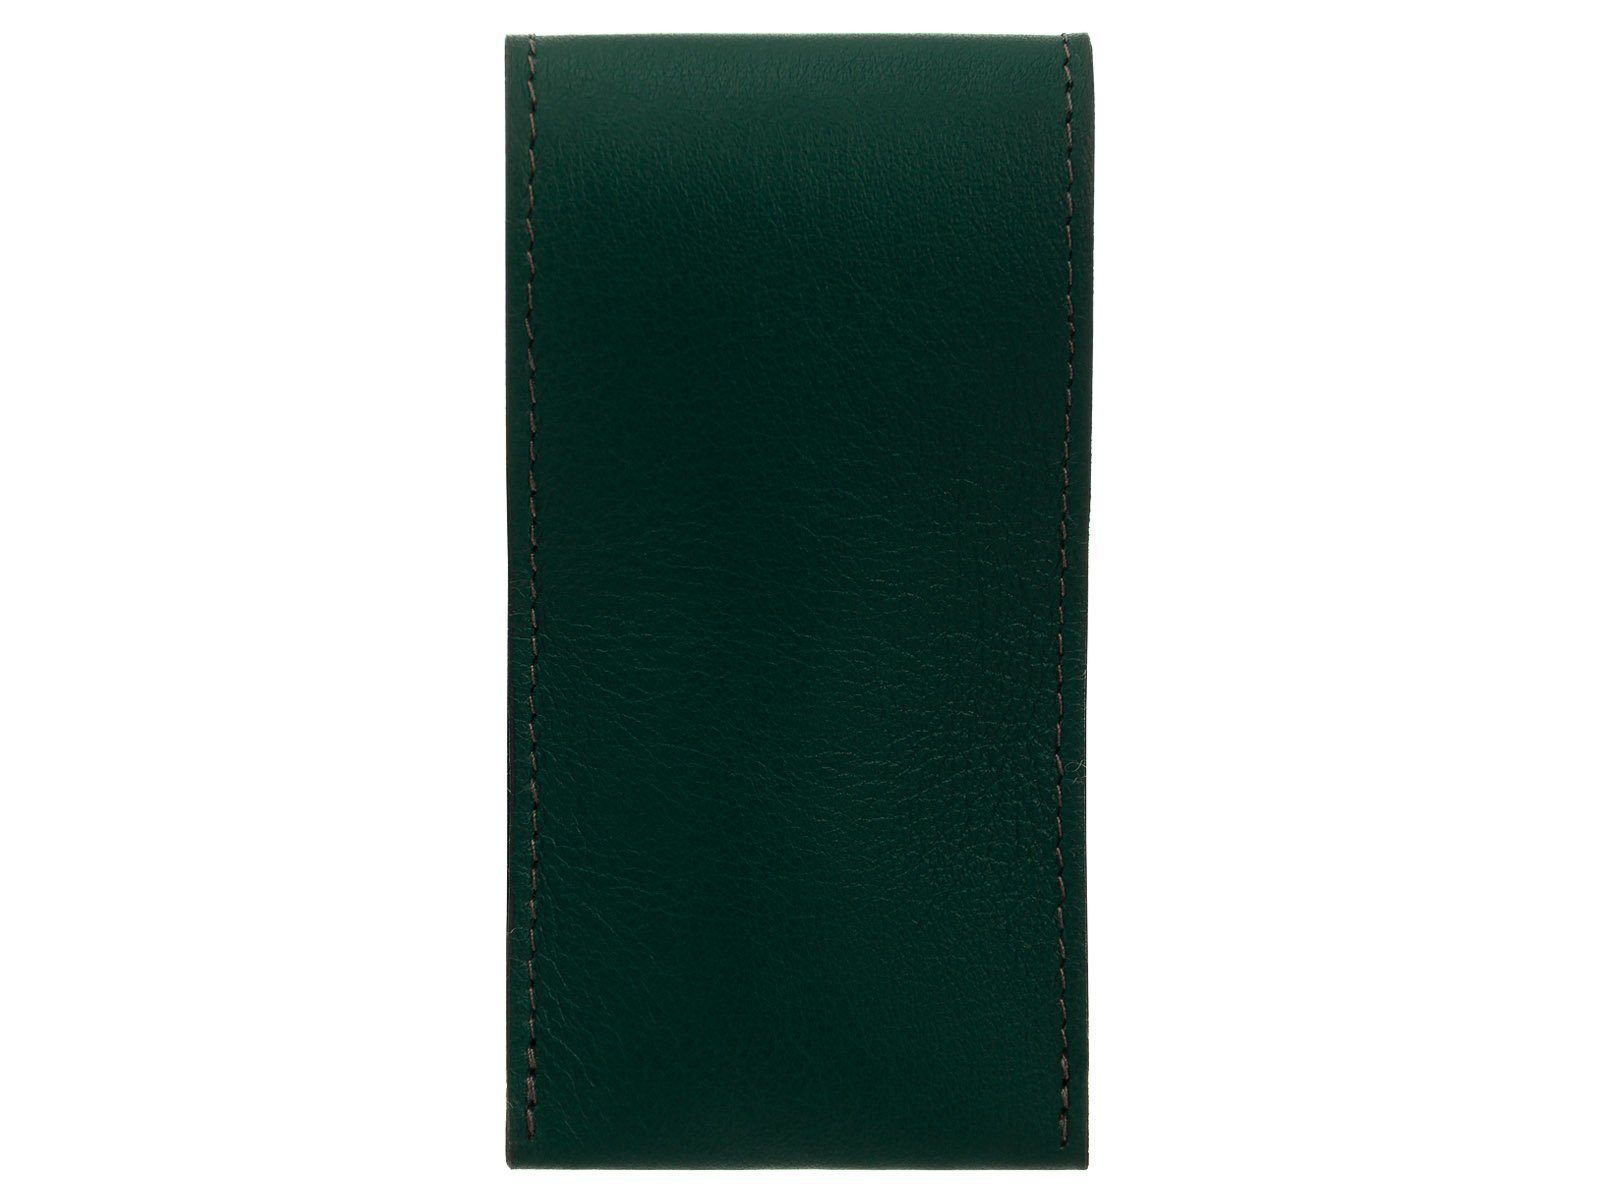 Taschenset Davidts 3 tlg., Maniküre-Etui 3 490018 Maniküre Etui Steck tlg., vert